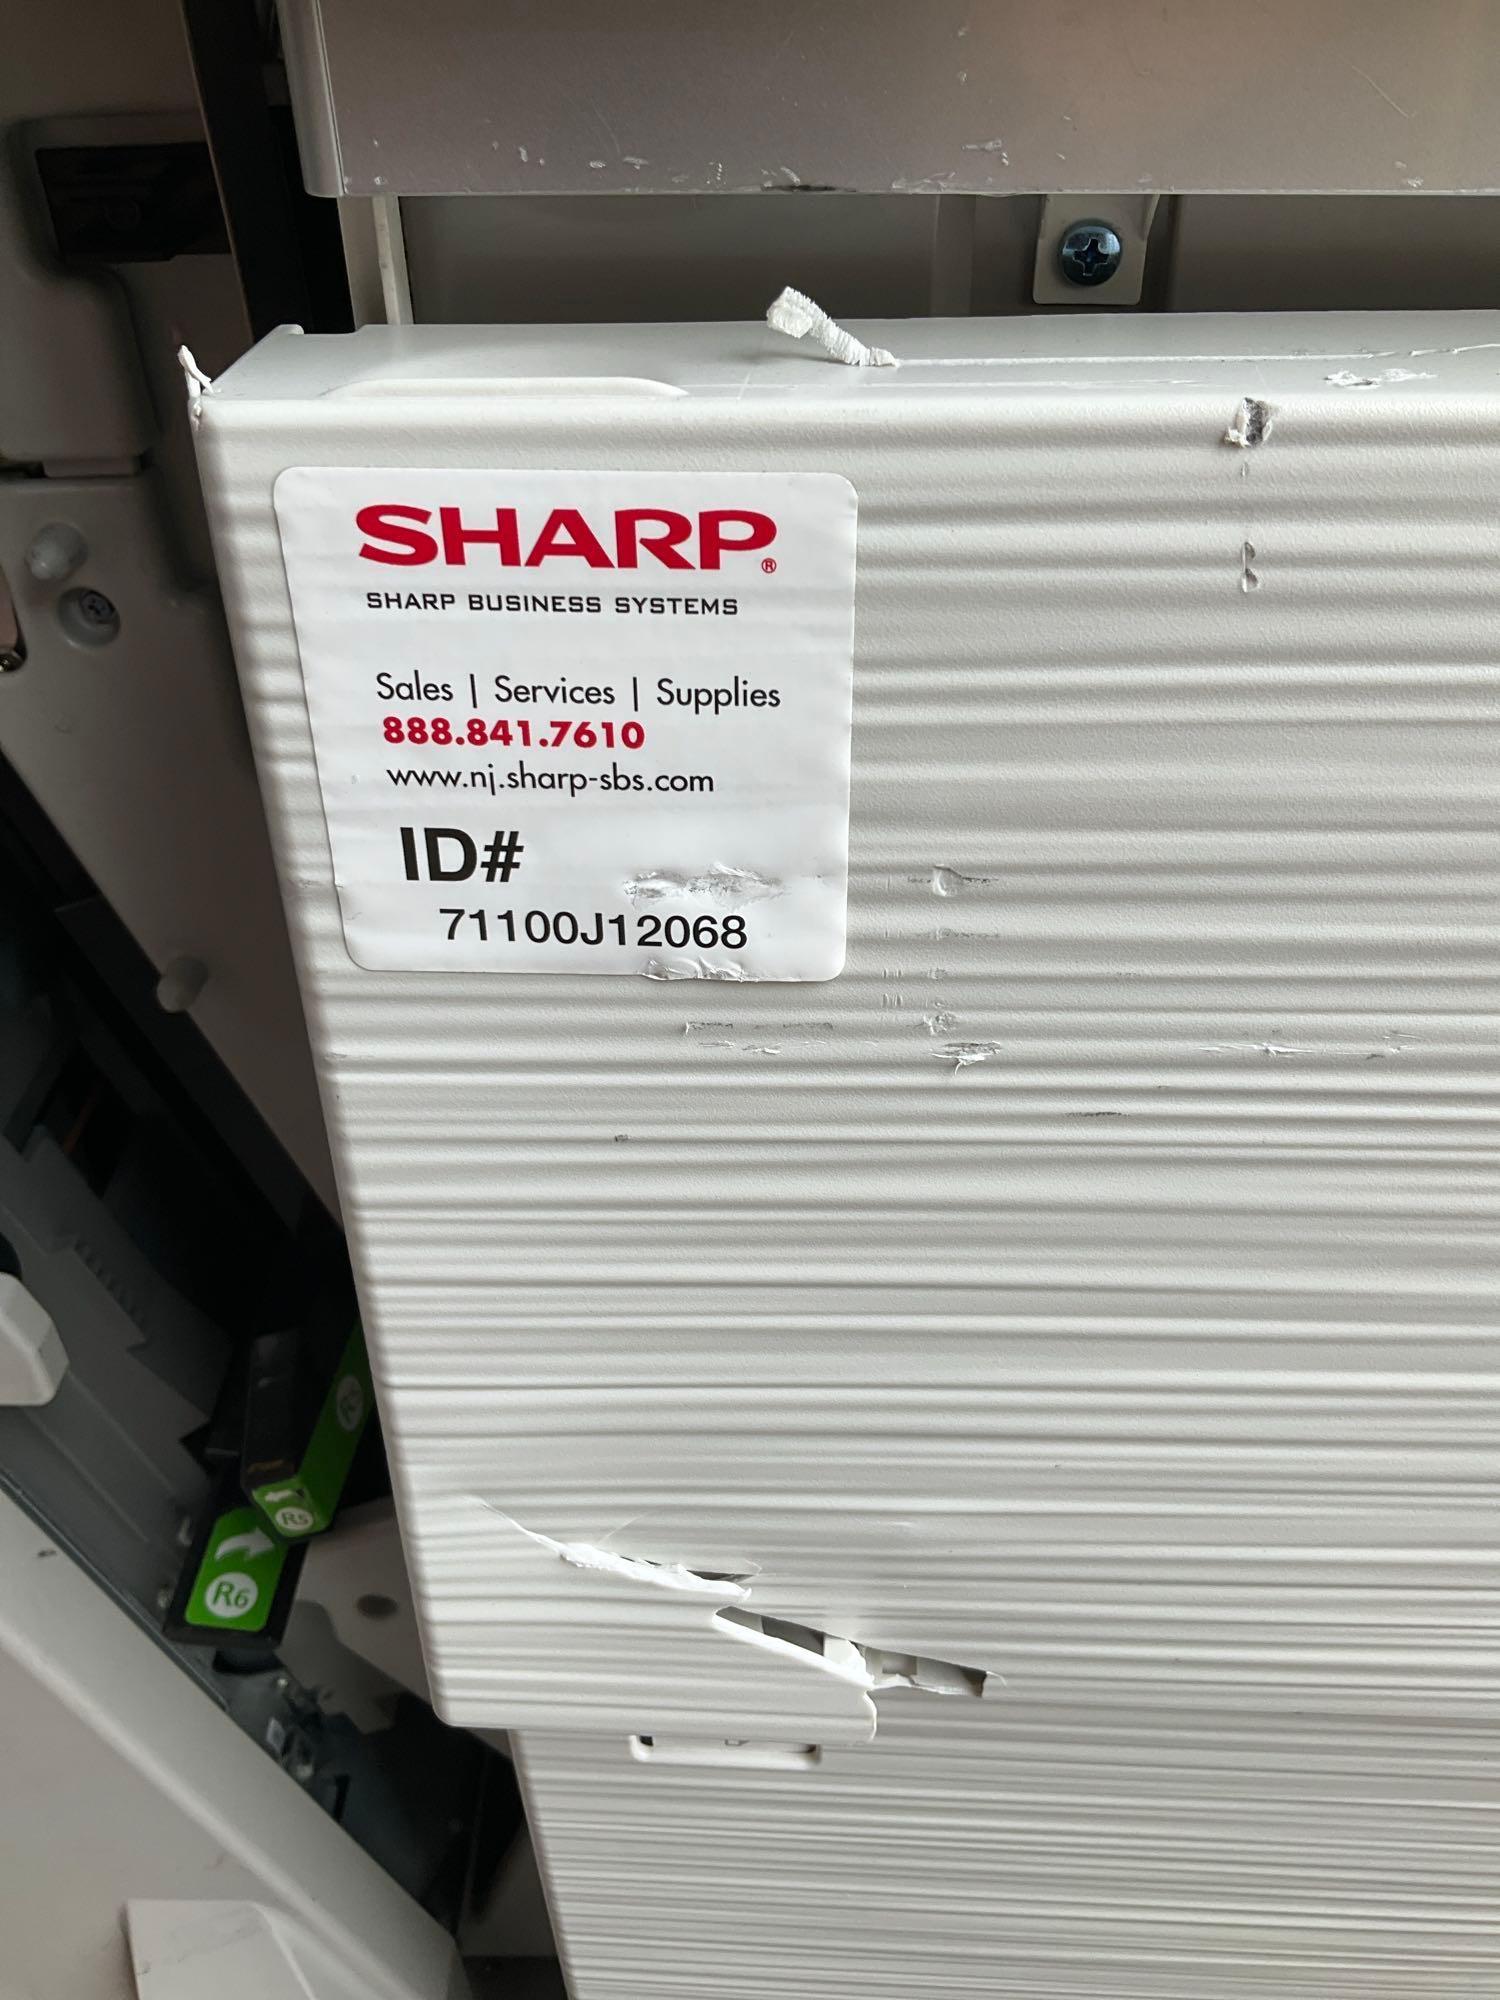 SHARP PRINTER DIGITAL MULTIFUNCTIONAL SYSTEM MODEL MX-M7570 WITH SHARP FINISHER; SHARP ESPO DIGITAL